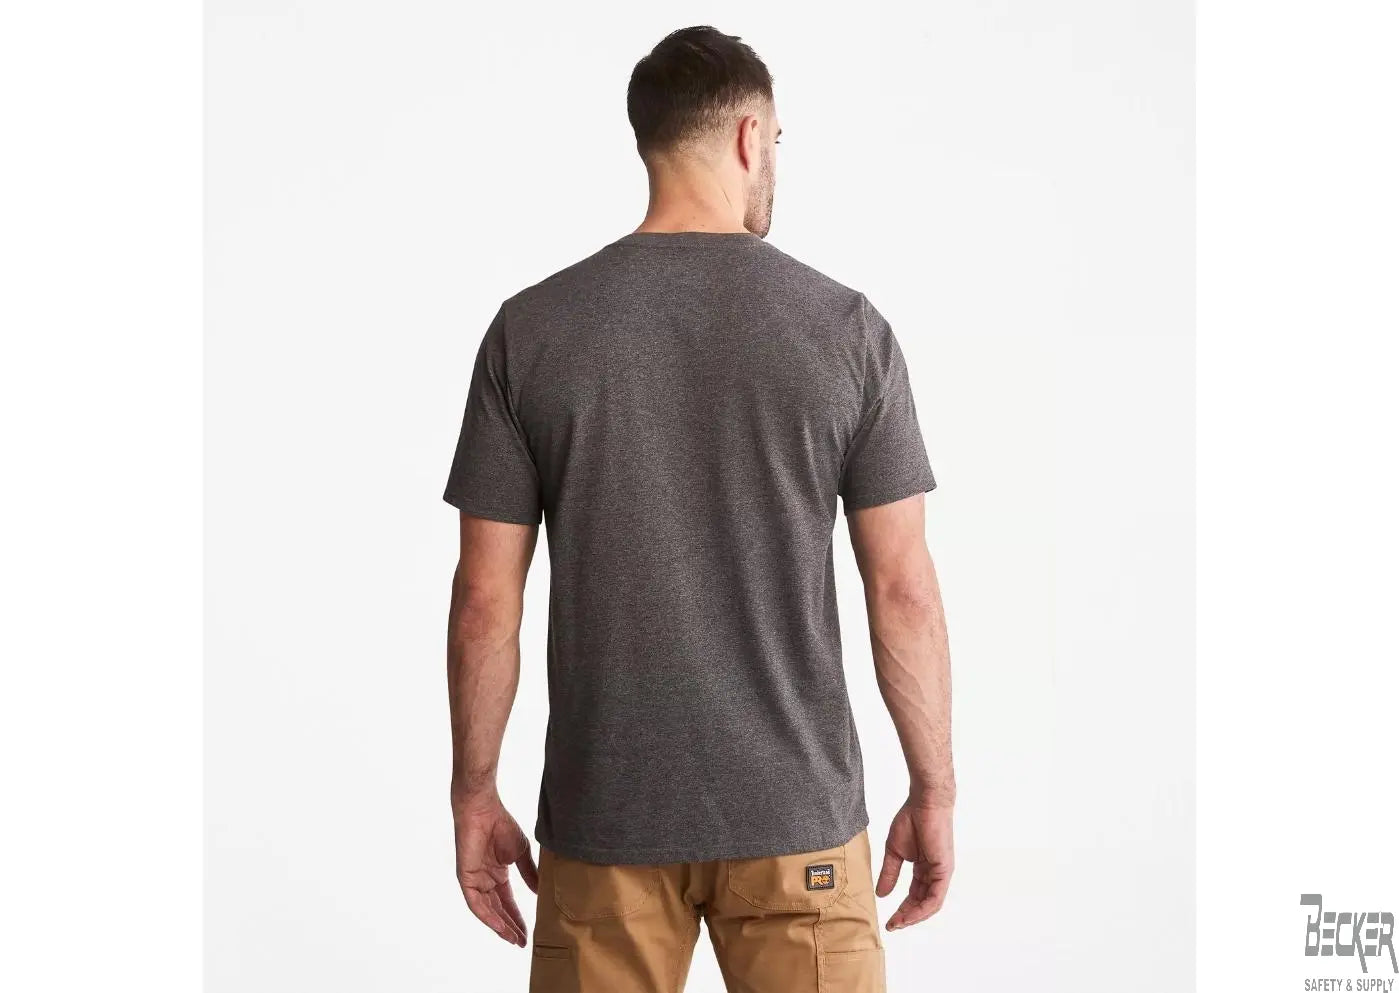 TIMBERLAND PRO - Base Plate Short Sleeve T-Shirt, Burnt Olive - Becker